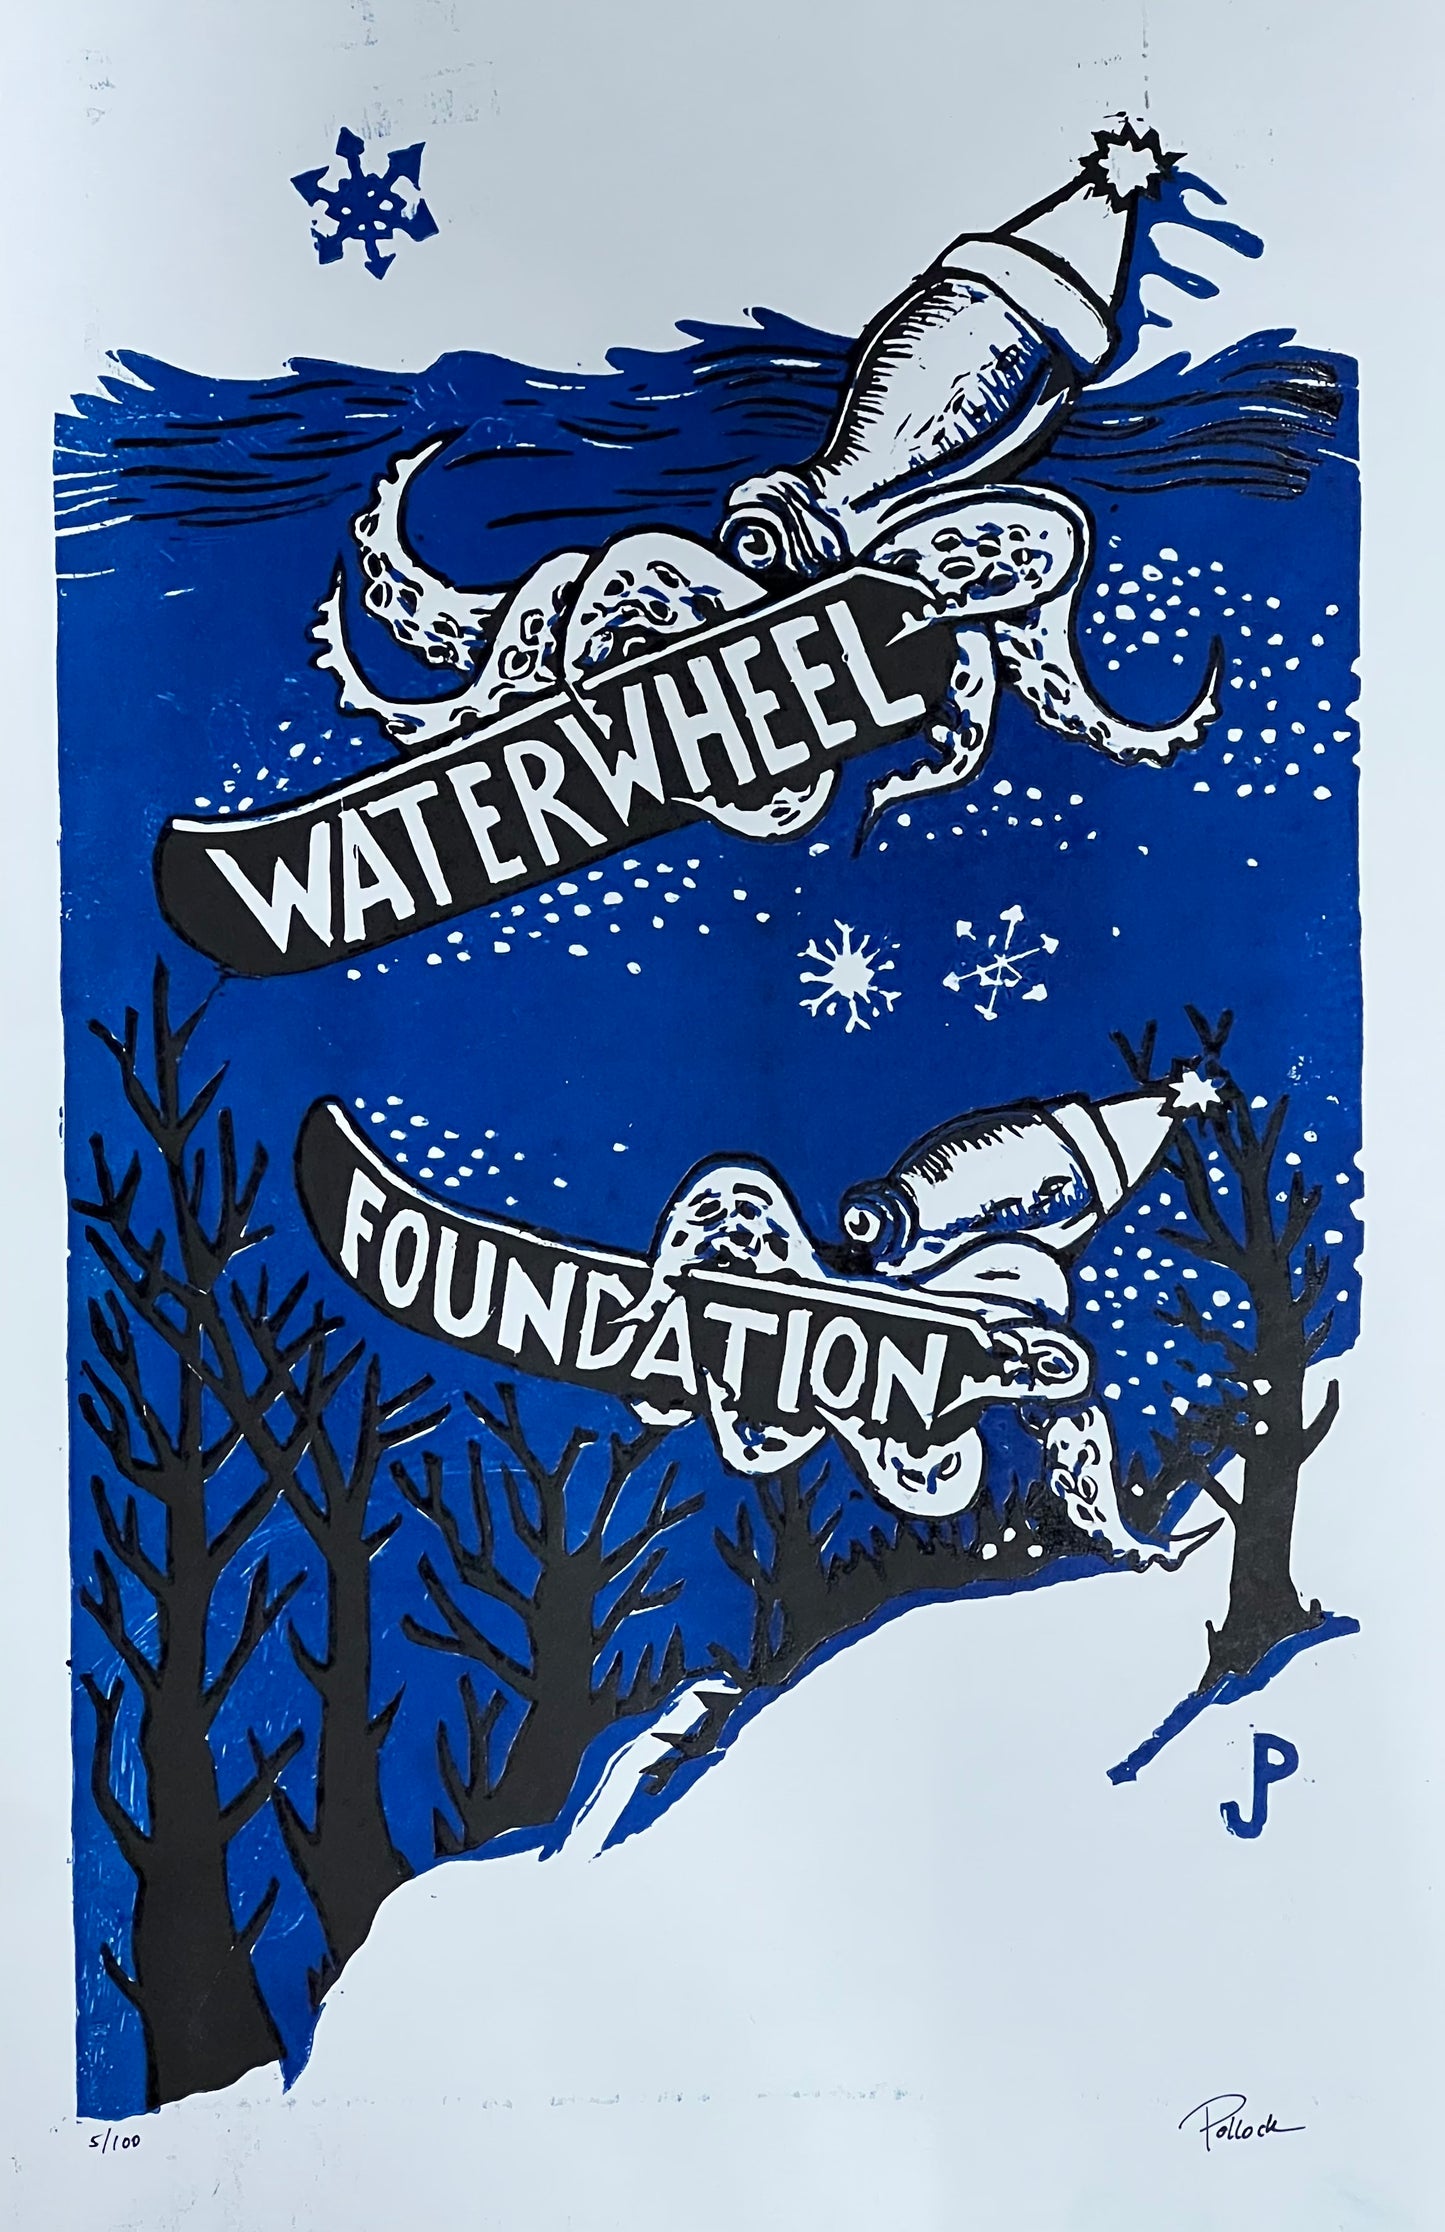 Jim Pollock "Waterwheel Foundation 2021" AP Edition